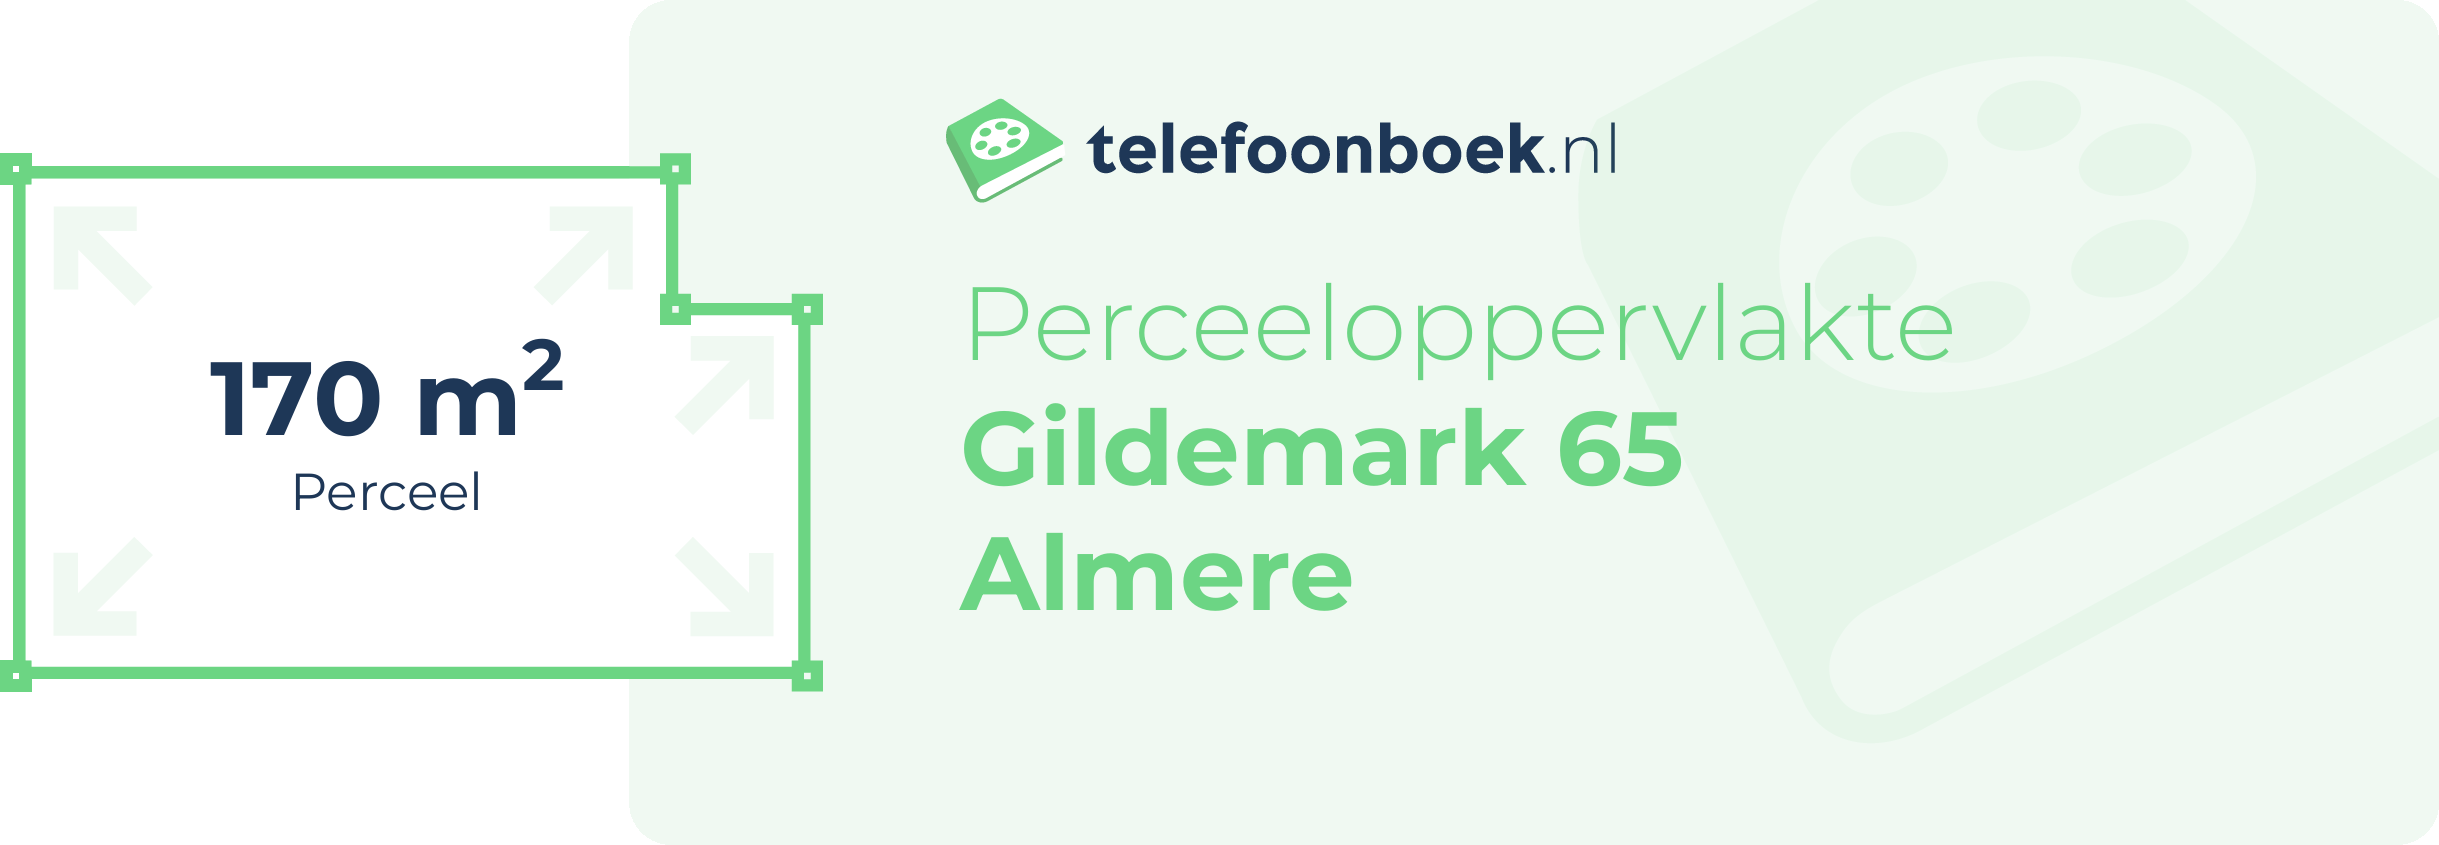 Perceeloppervlakte Gildemark 65 Almere